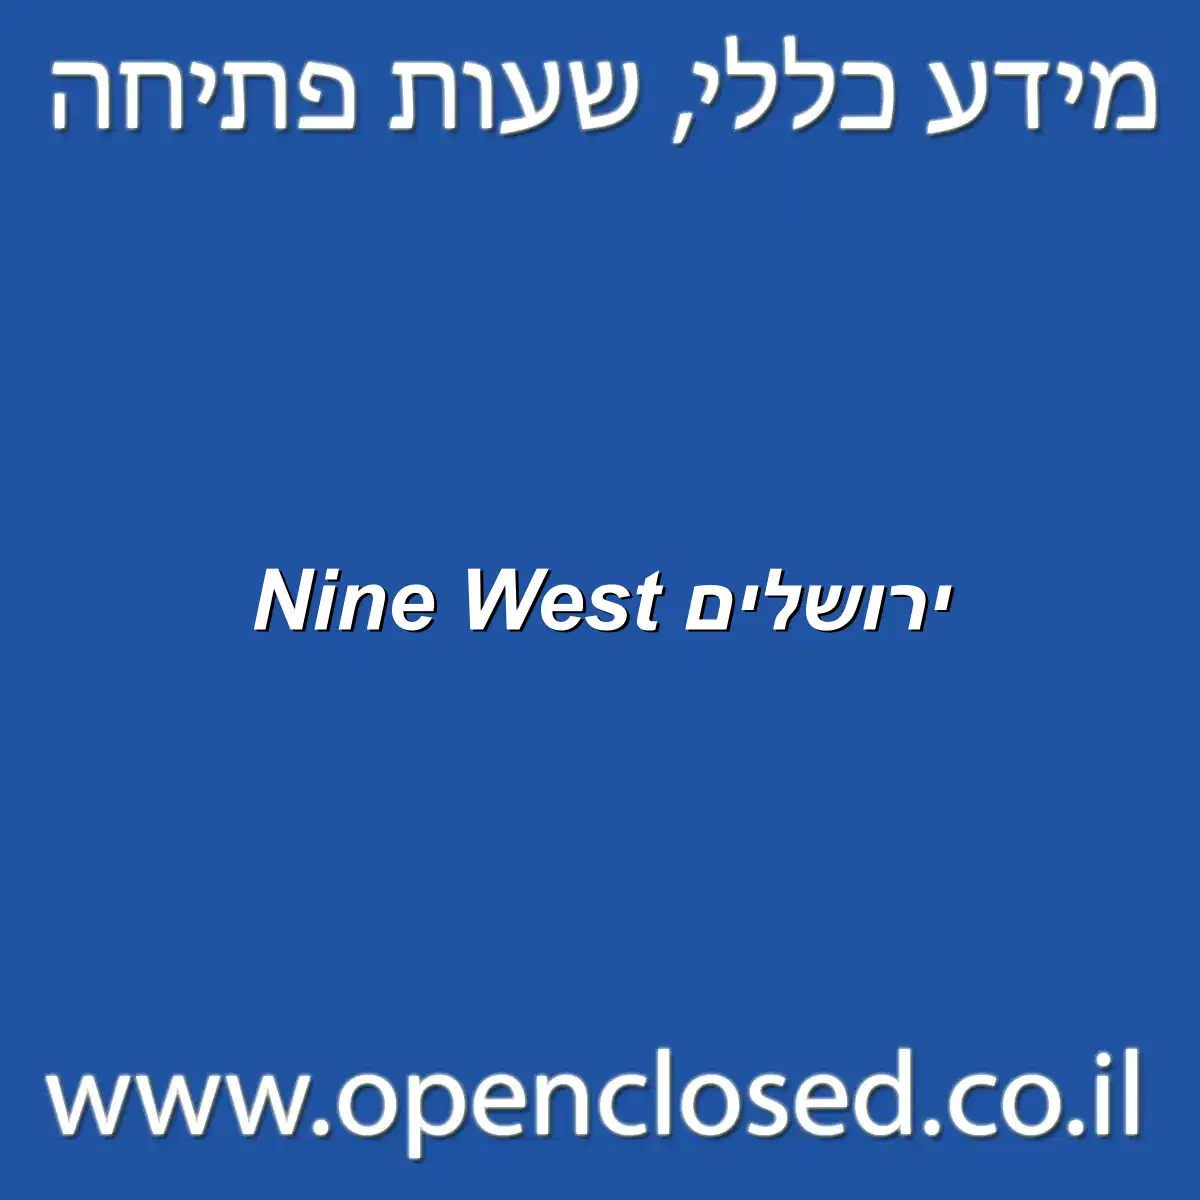 Nine West ירושלים